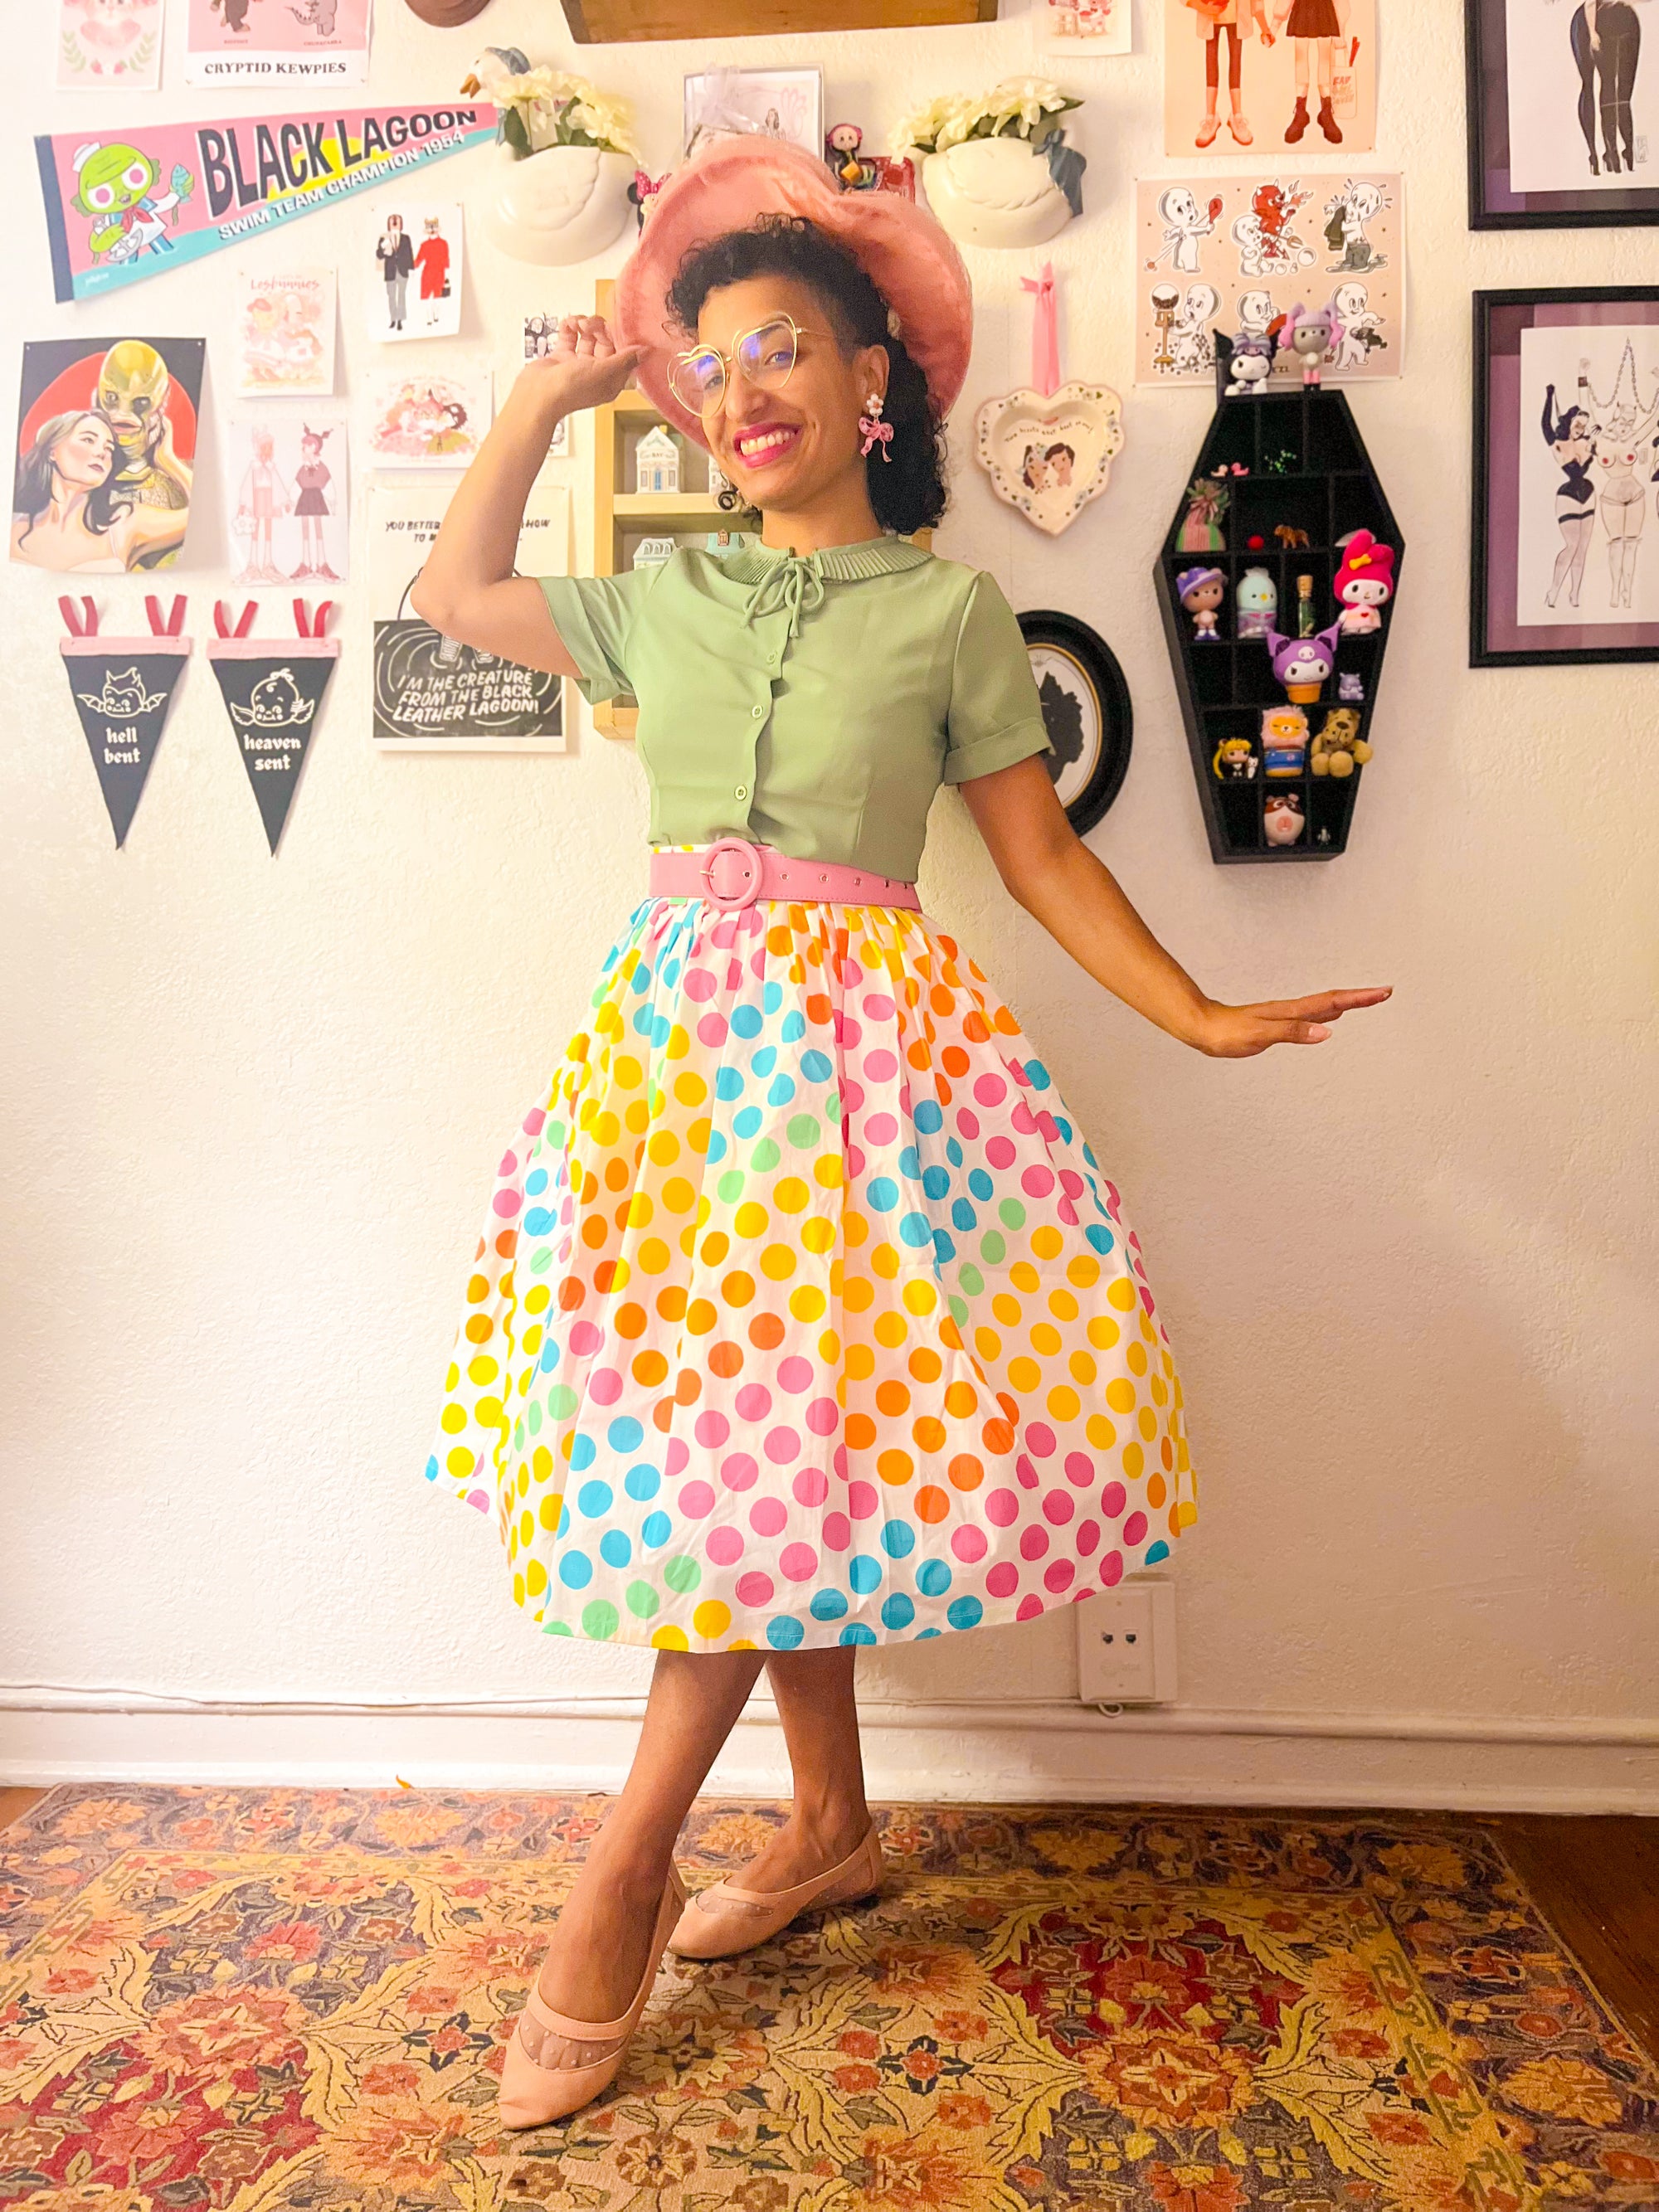 Gloria Skirt in Dot Candy Print